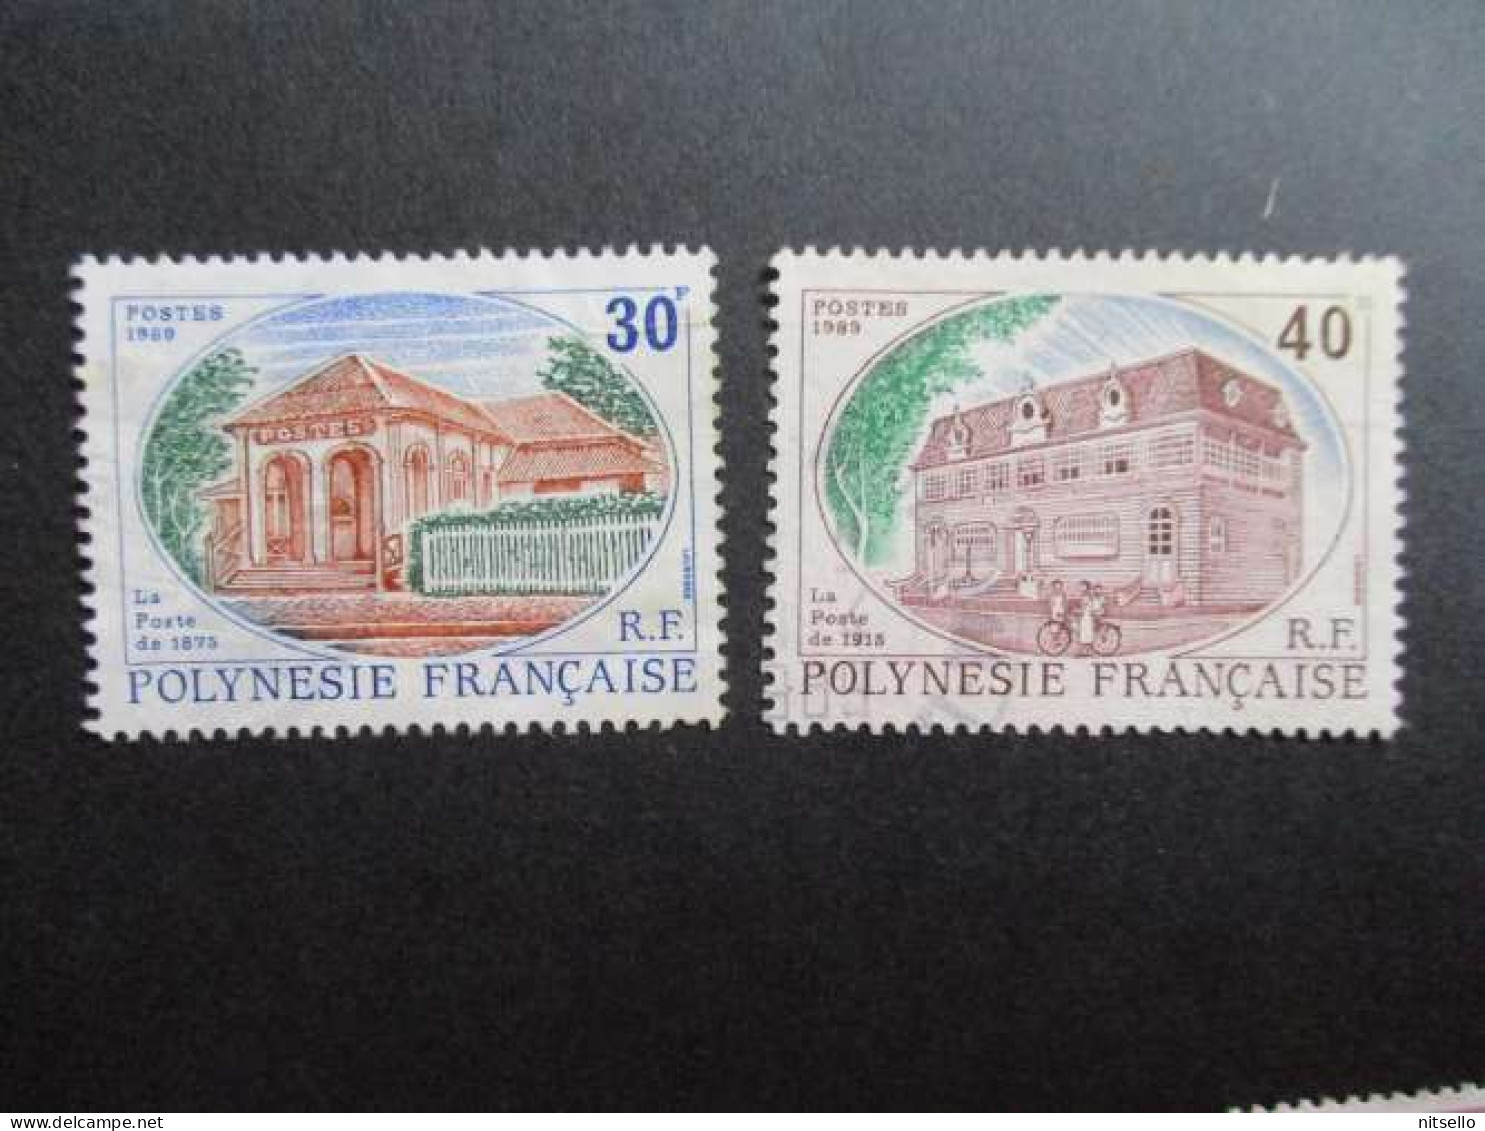 LOTE 2202A ///  (C030)  POLINESIA FRANCESA  - YVERT Nº: 322 & 323 OBL 1988 ¡¡¡ OFERTA - LIQUIDATION - JE LIQUIDE !!! - Used Stamps